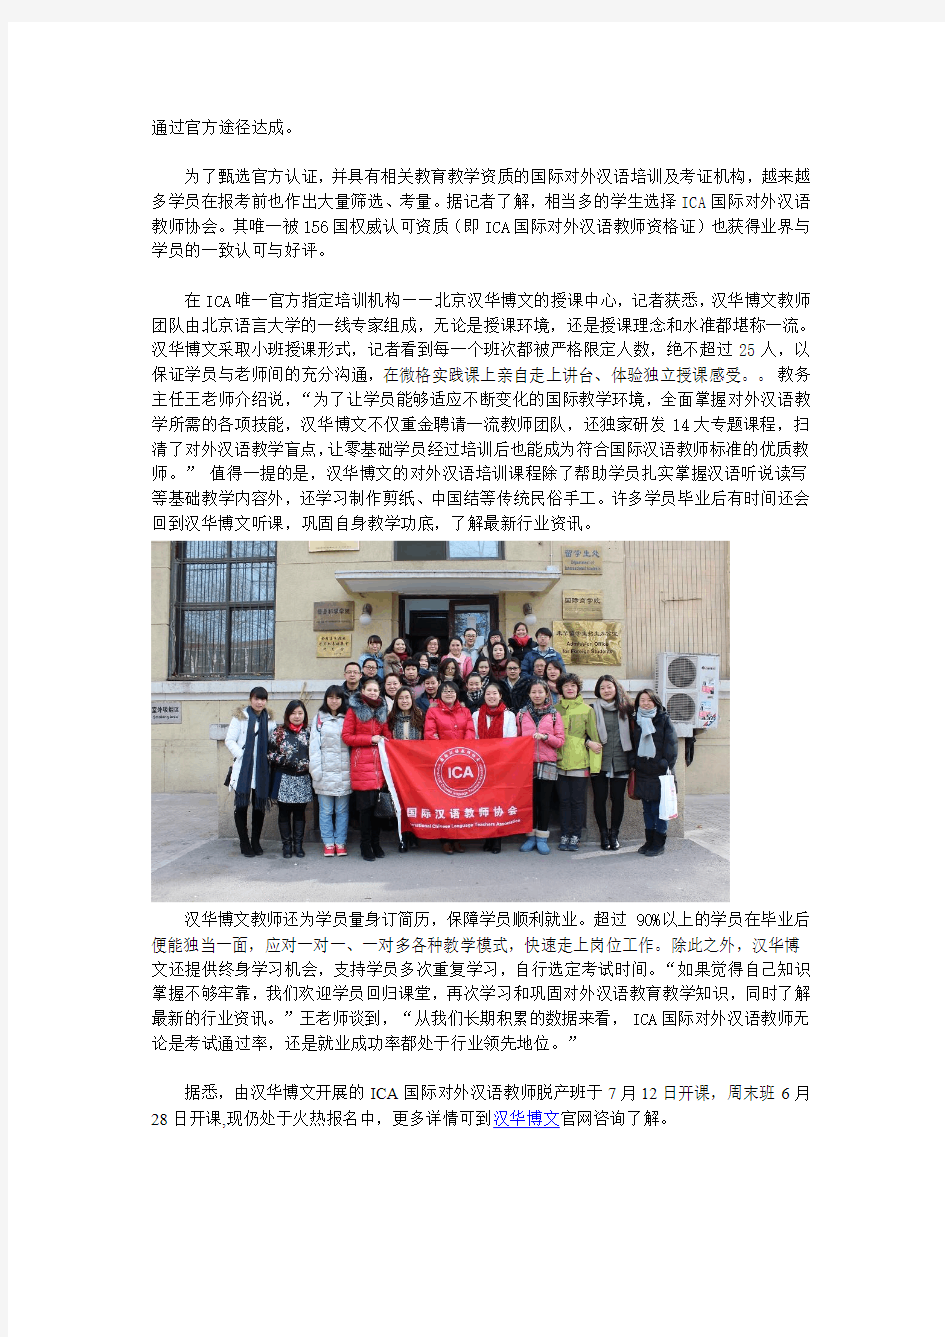 ICA国际汉语教师赴马来西亚工作、生活双丰收